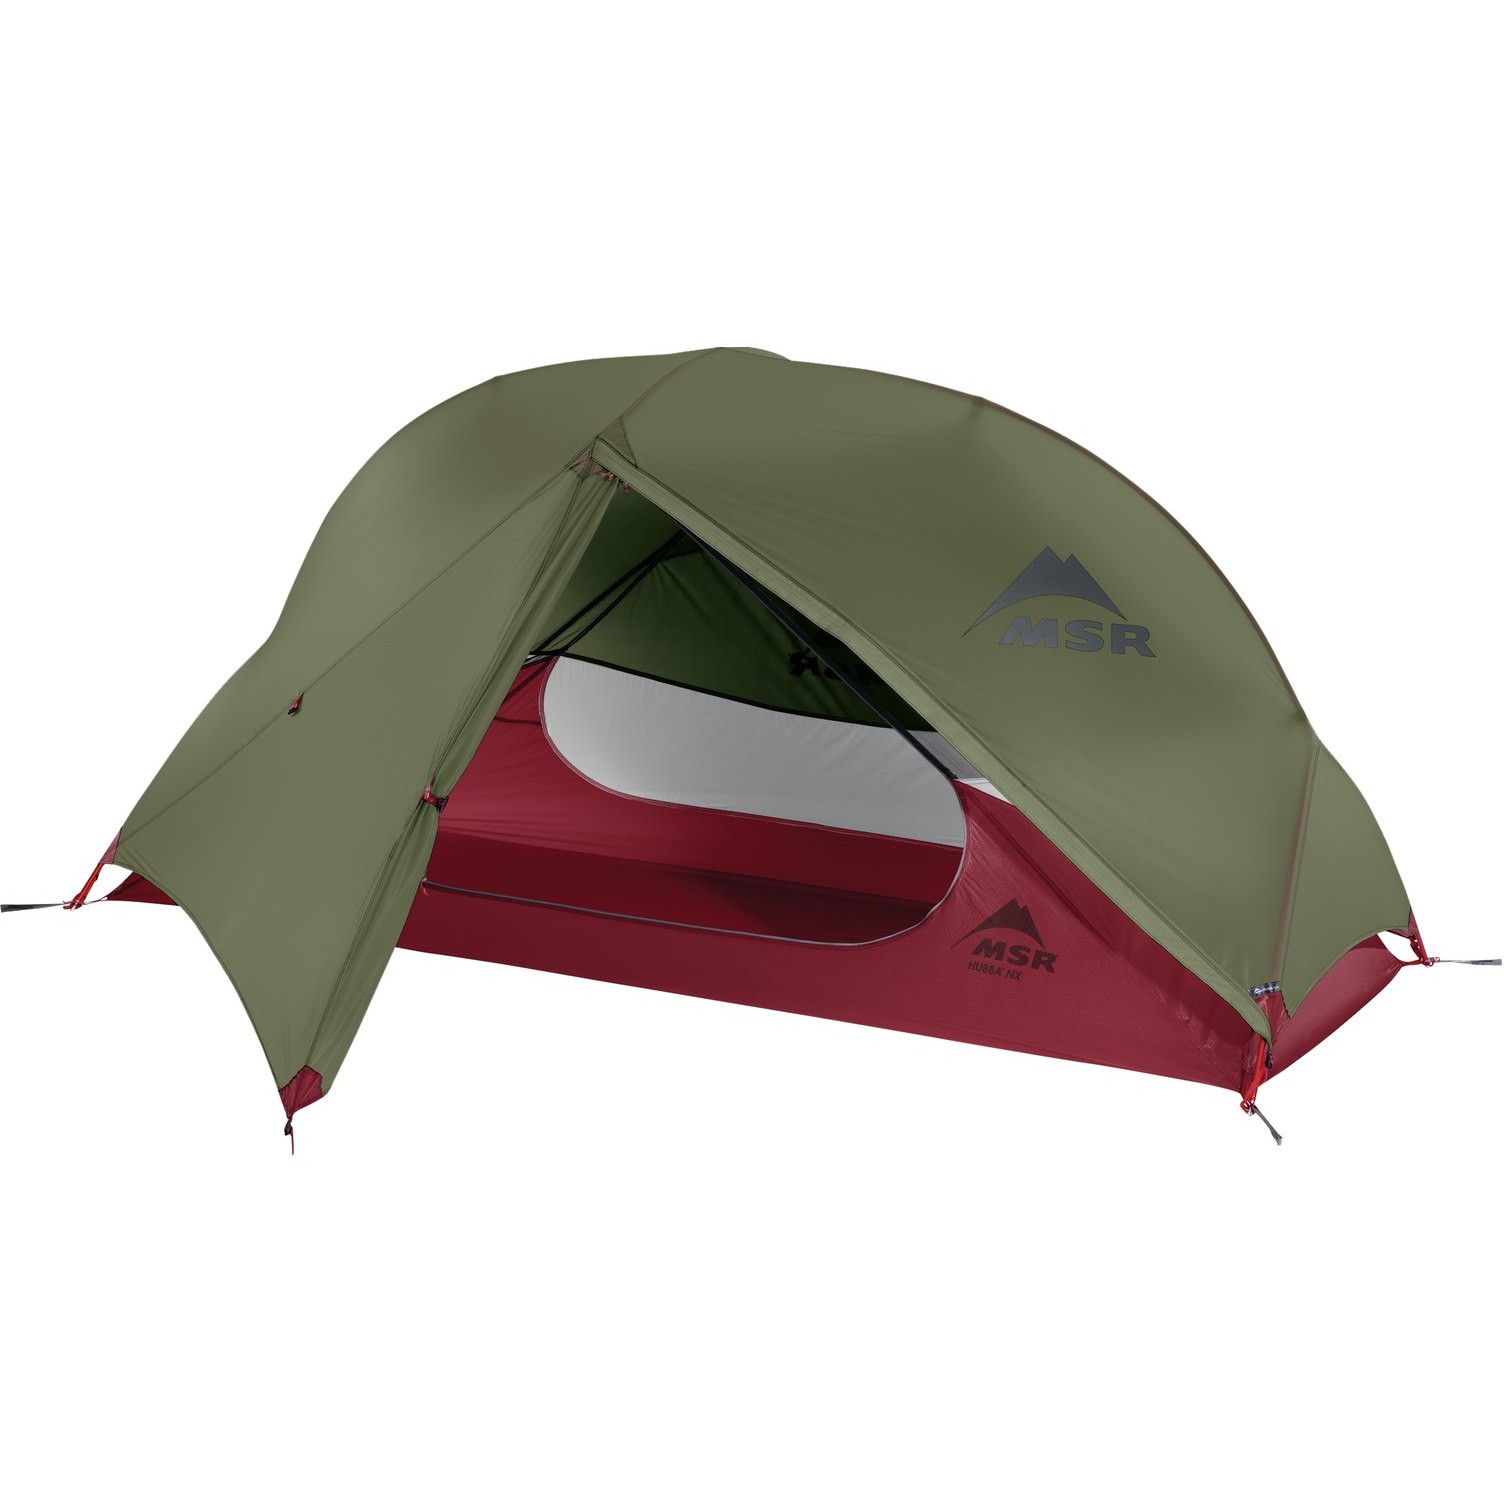 Image of MSR Hubba NX Solo UL Tent - green